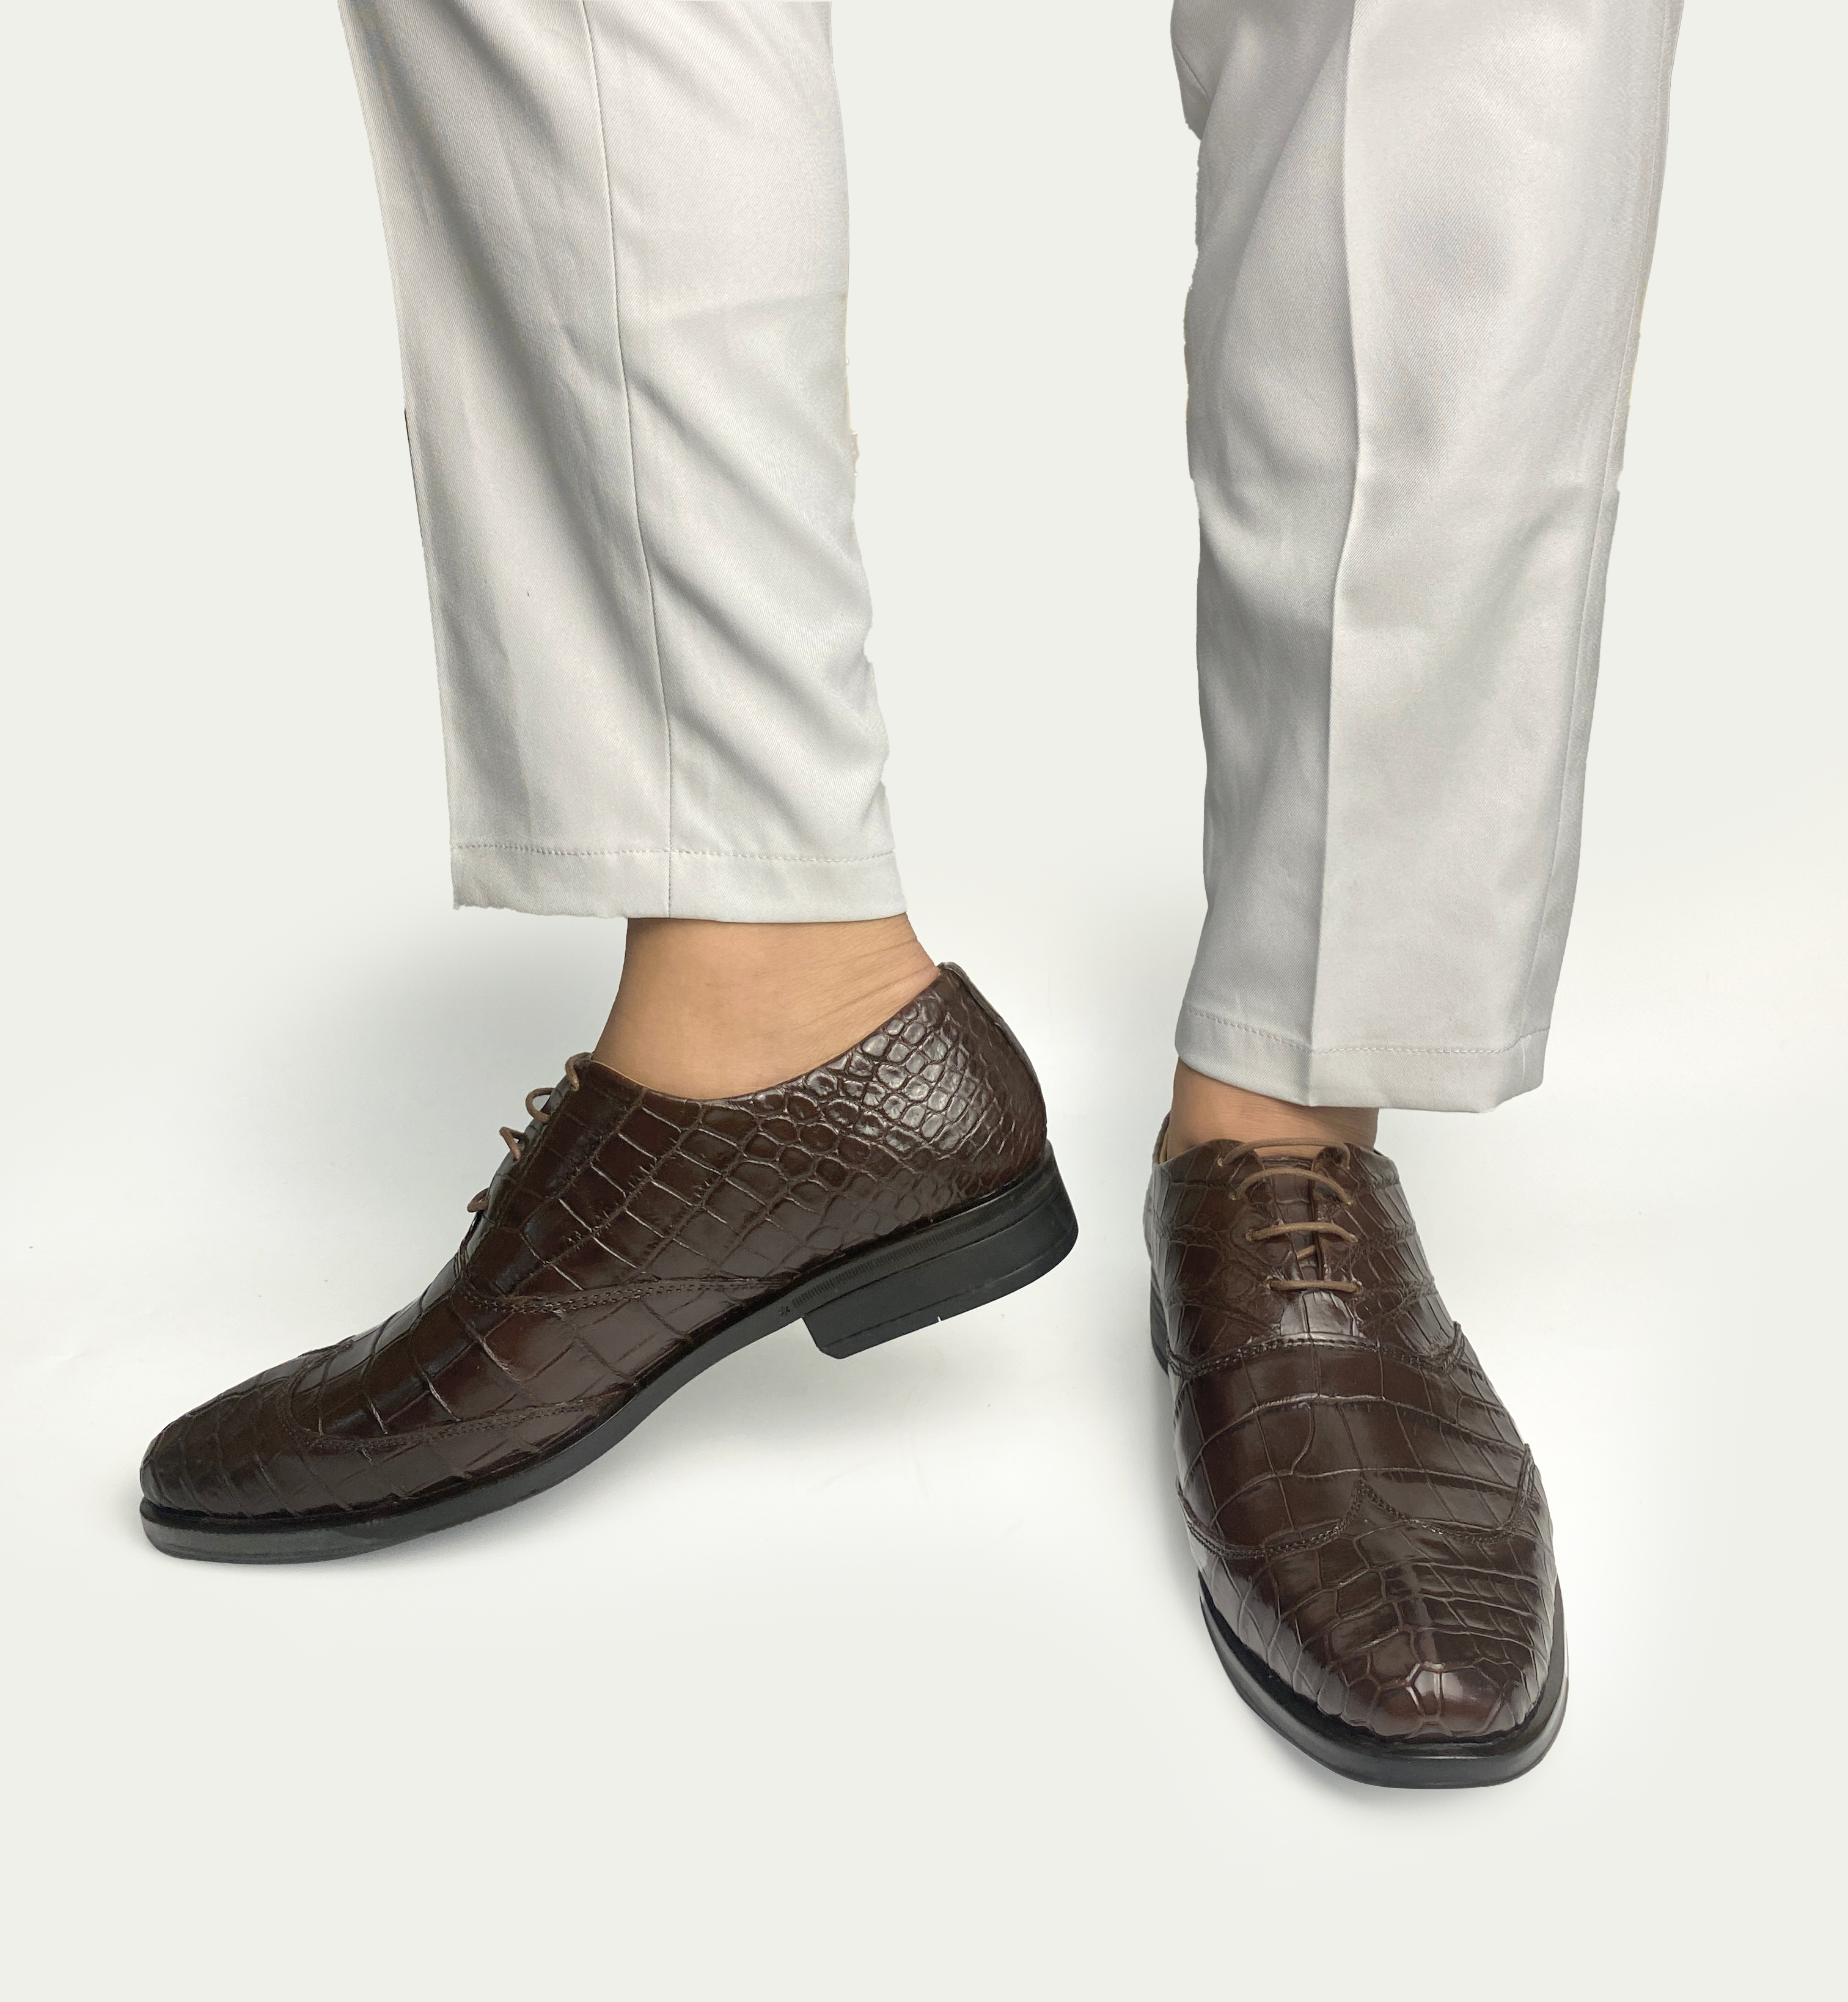 Dark Brown Alligator Leather Oxford Shoes For Men | Formal Wedding Shoes | SH03A42